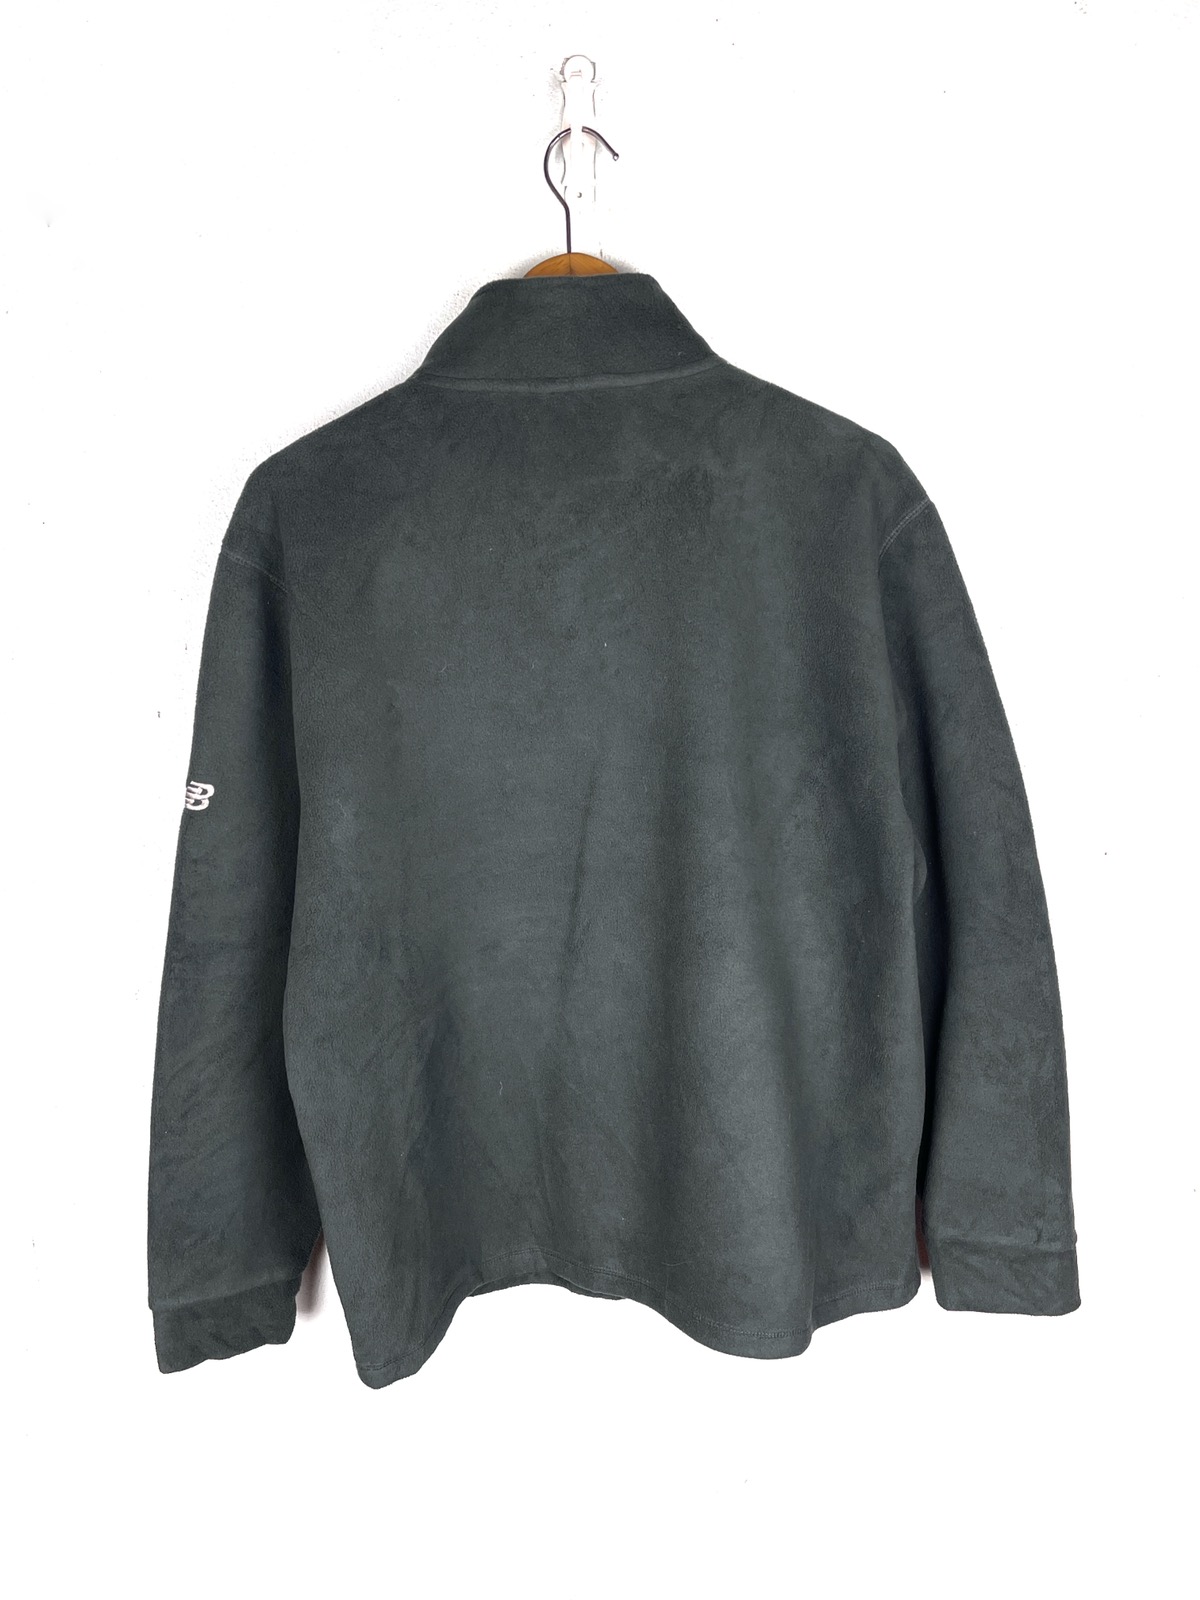 New Balance fleece zipper jacket - 8